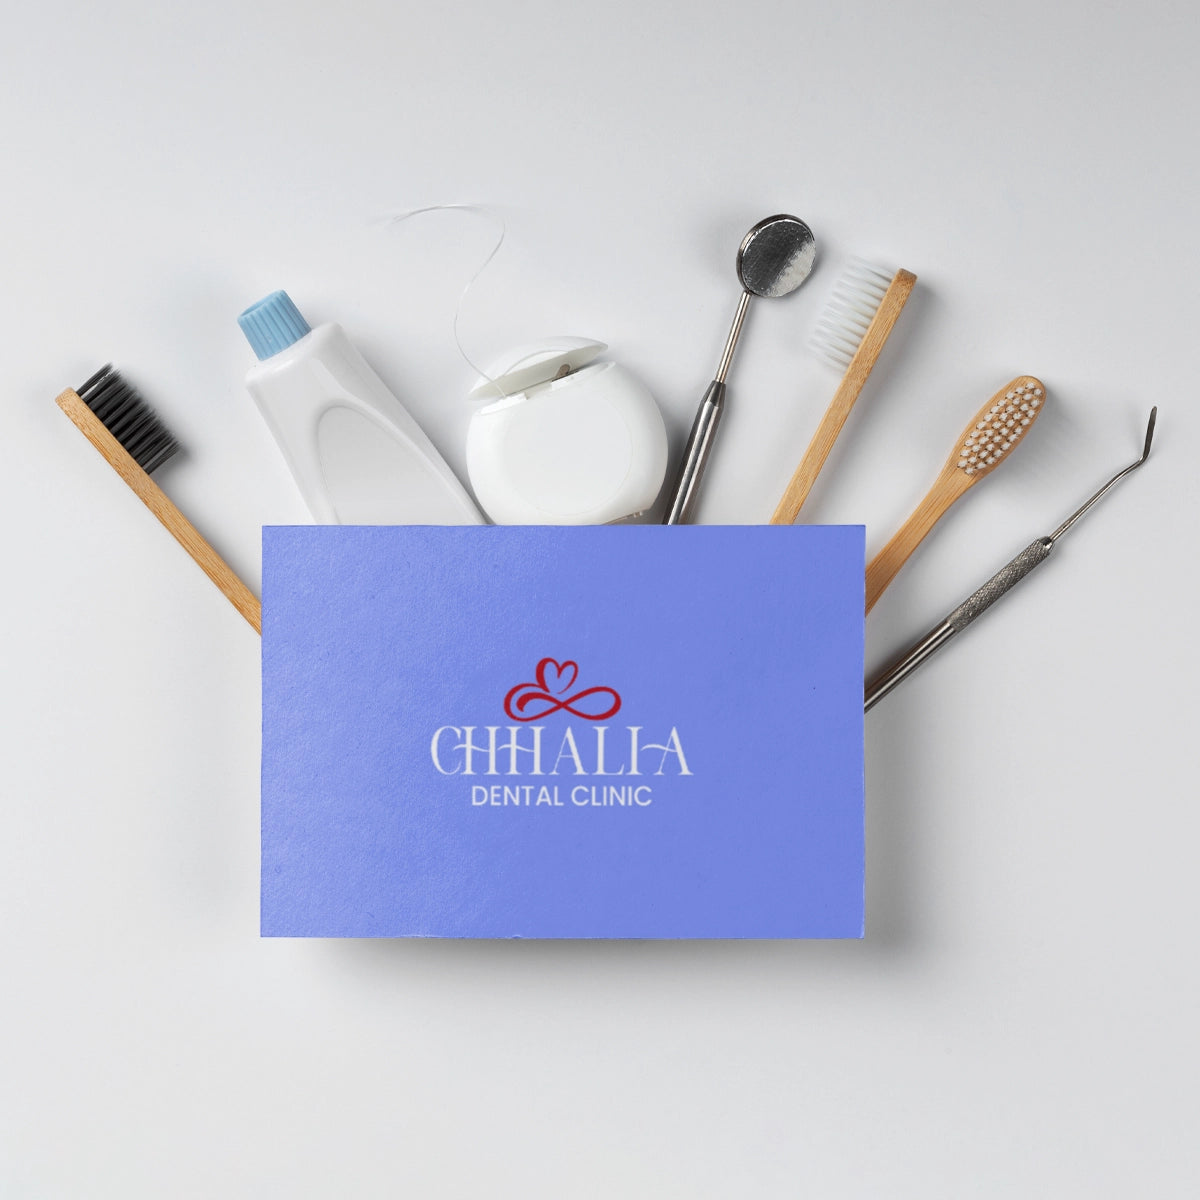 chhalia.com